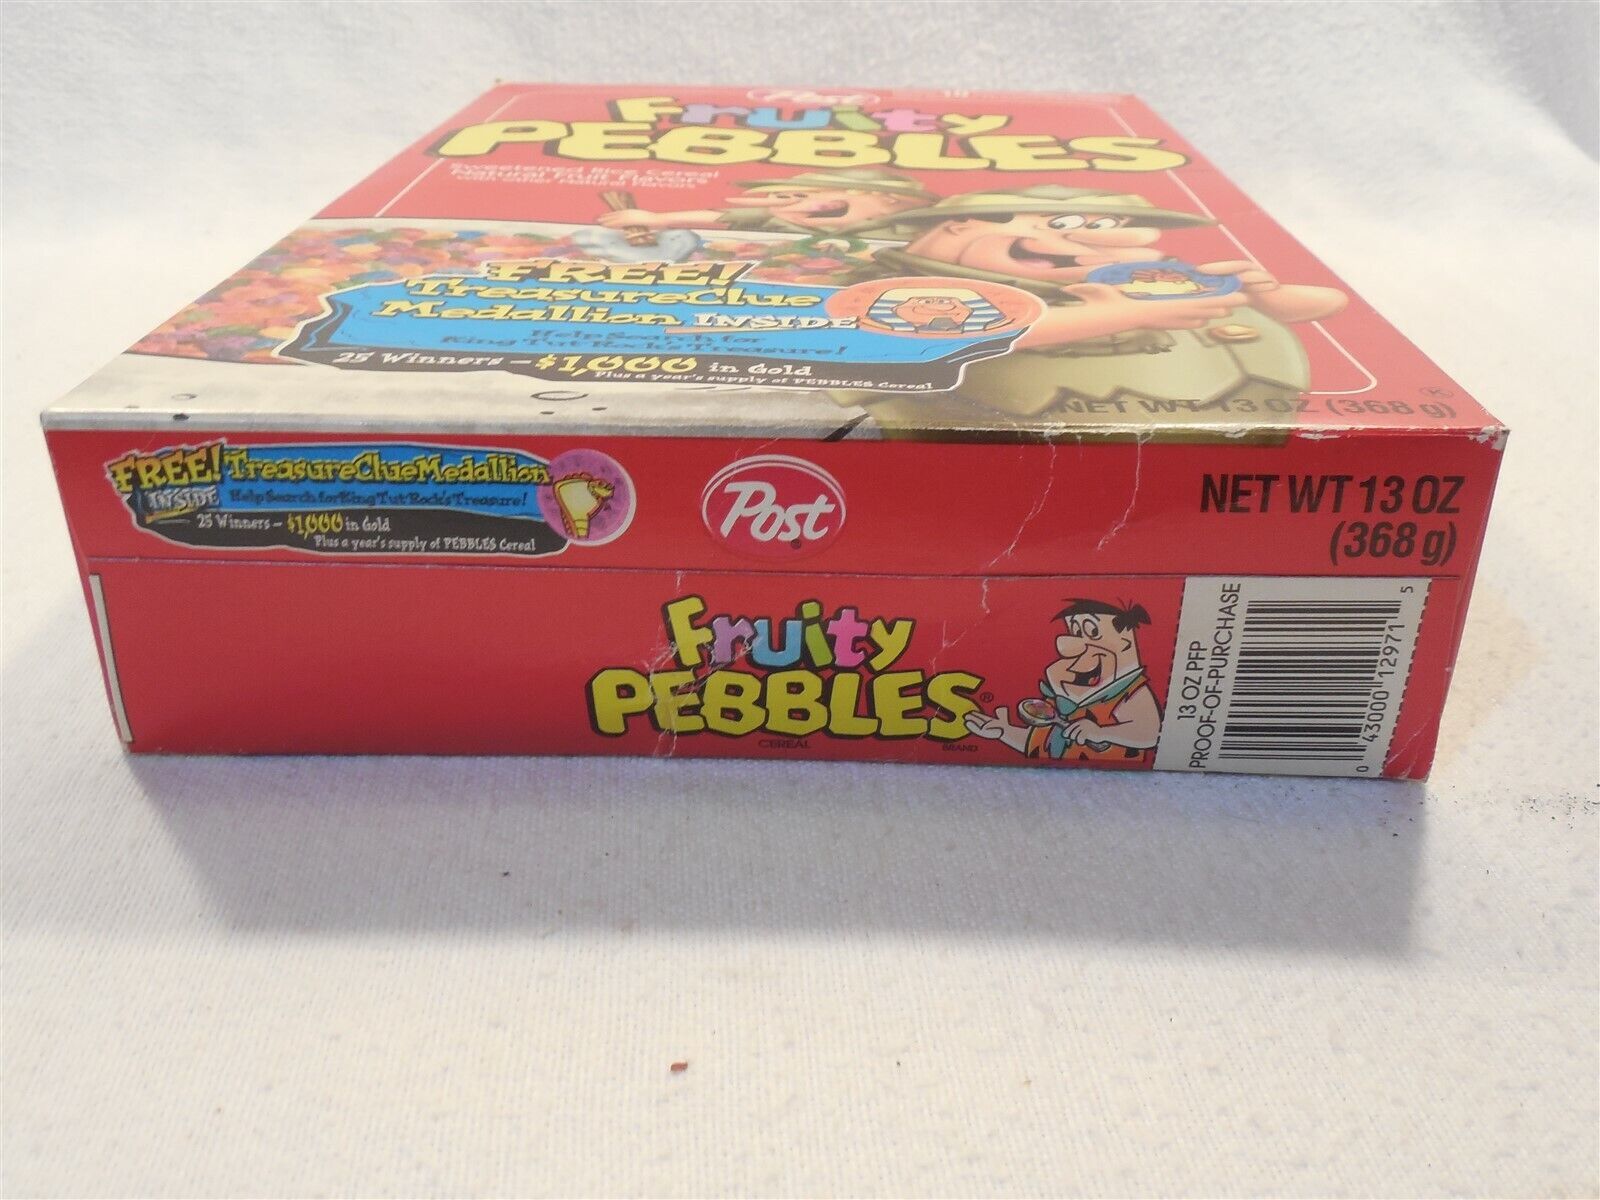 Flintstones 1996 Post Fruity Pebbles Cereal Box Treasure Clue Medallion